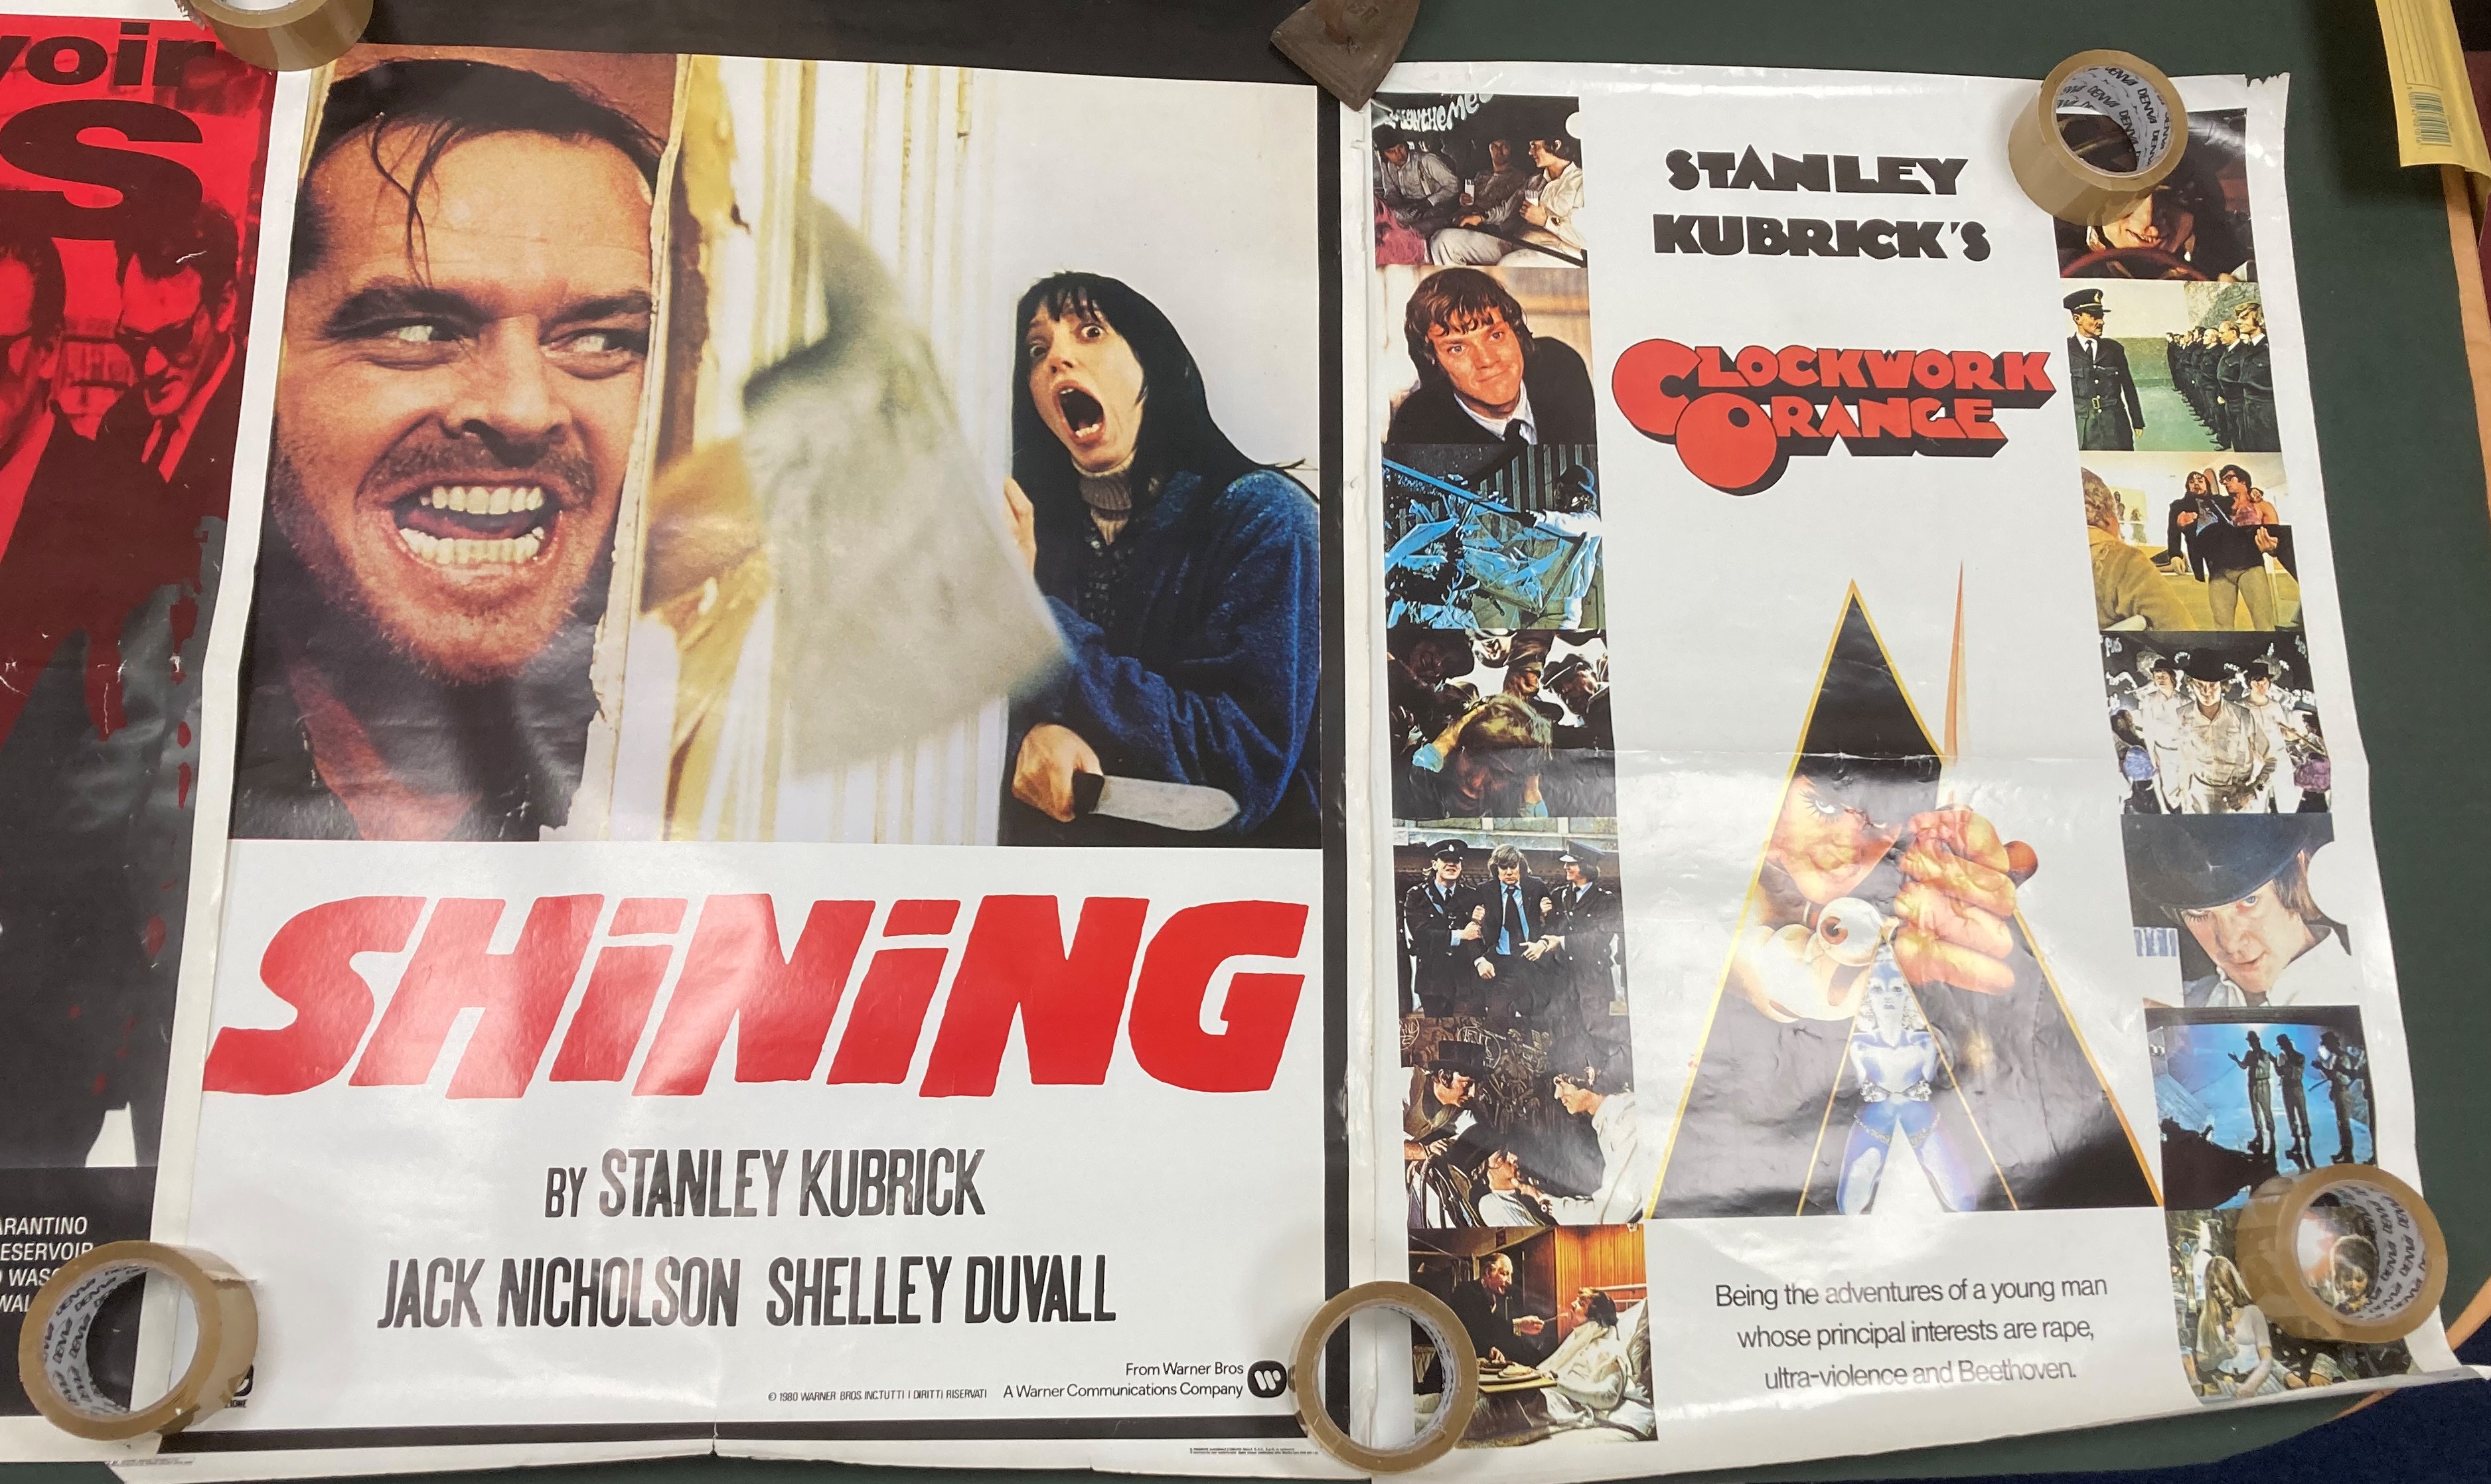 Four posters of iconic films 'Clockwork Orange' 90cm x 65cm, - Image 3 of 3